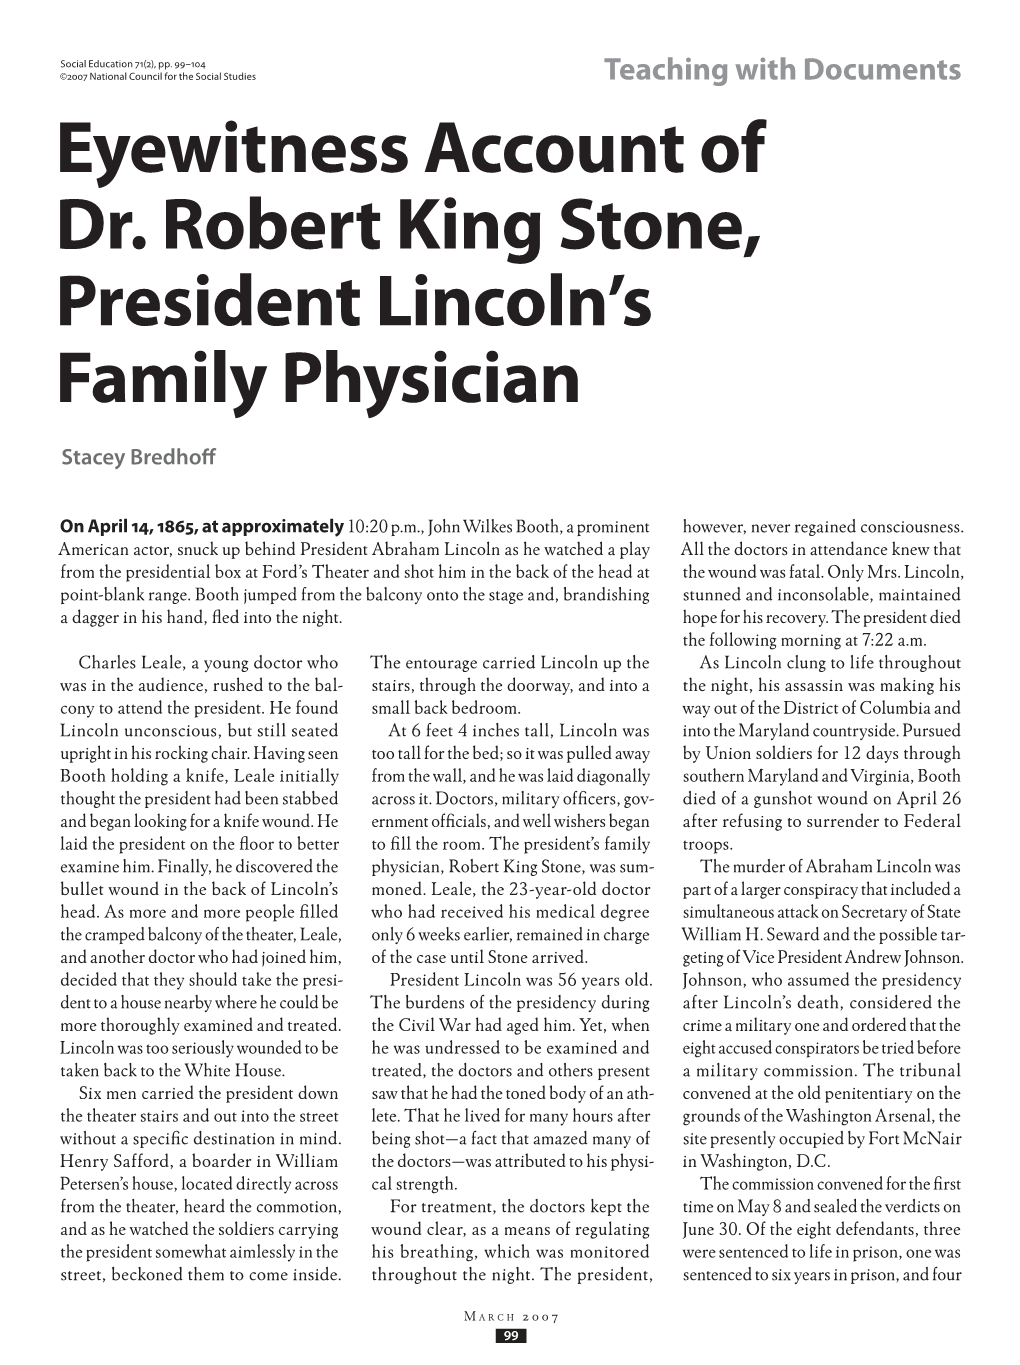 Eyewitness Account of Dr. Robert King Stone, President Lincoln's Family